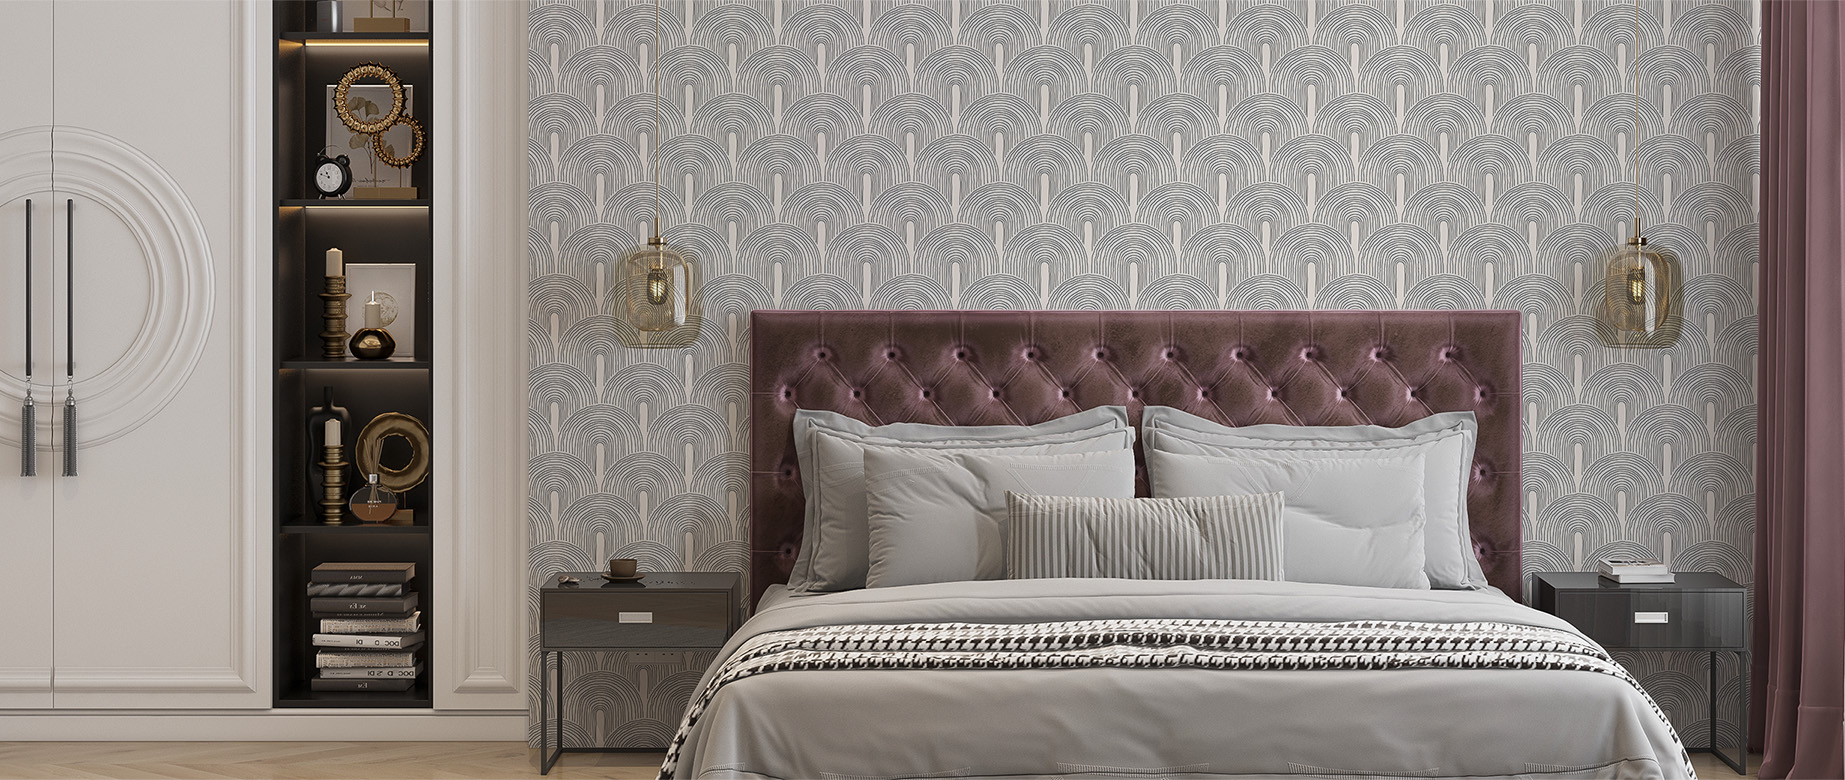 beige-circle-design-Seamless design repeat pattern wallpaper-in-wide-room